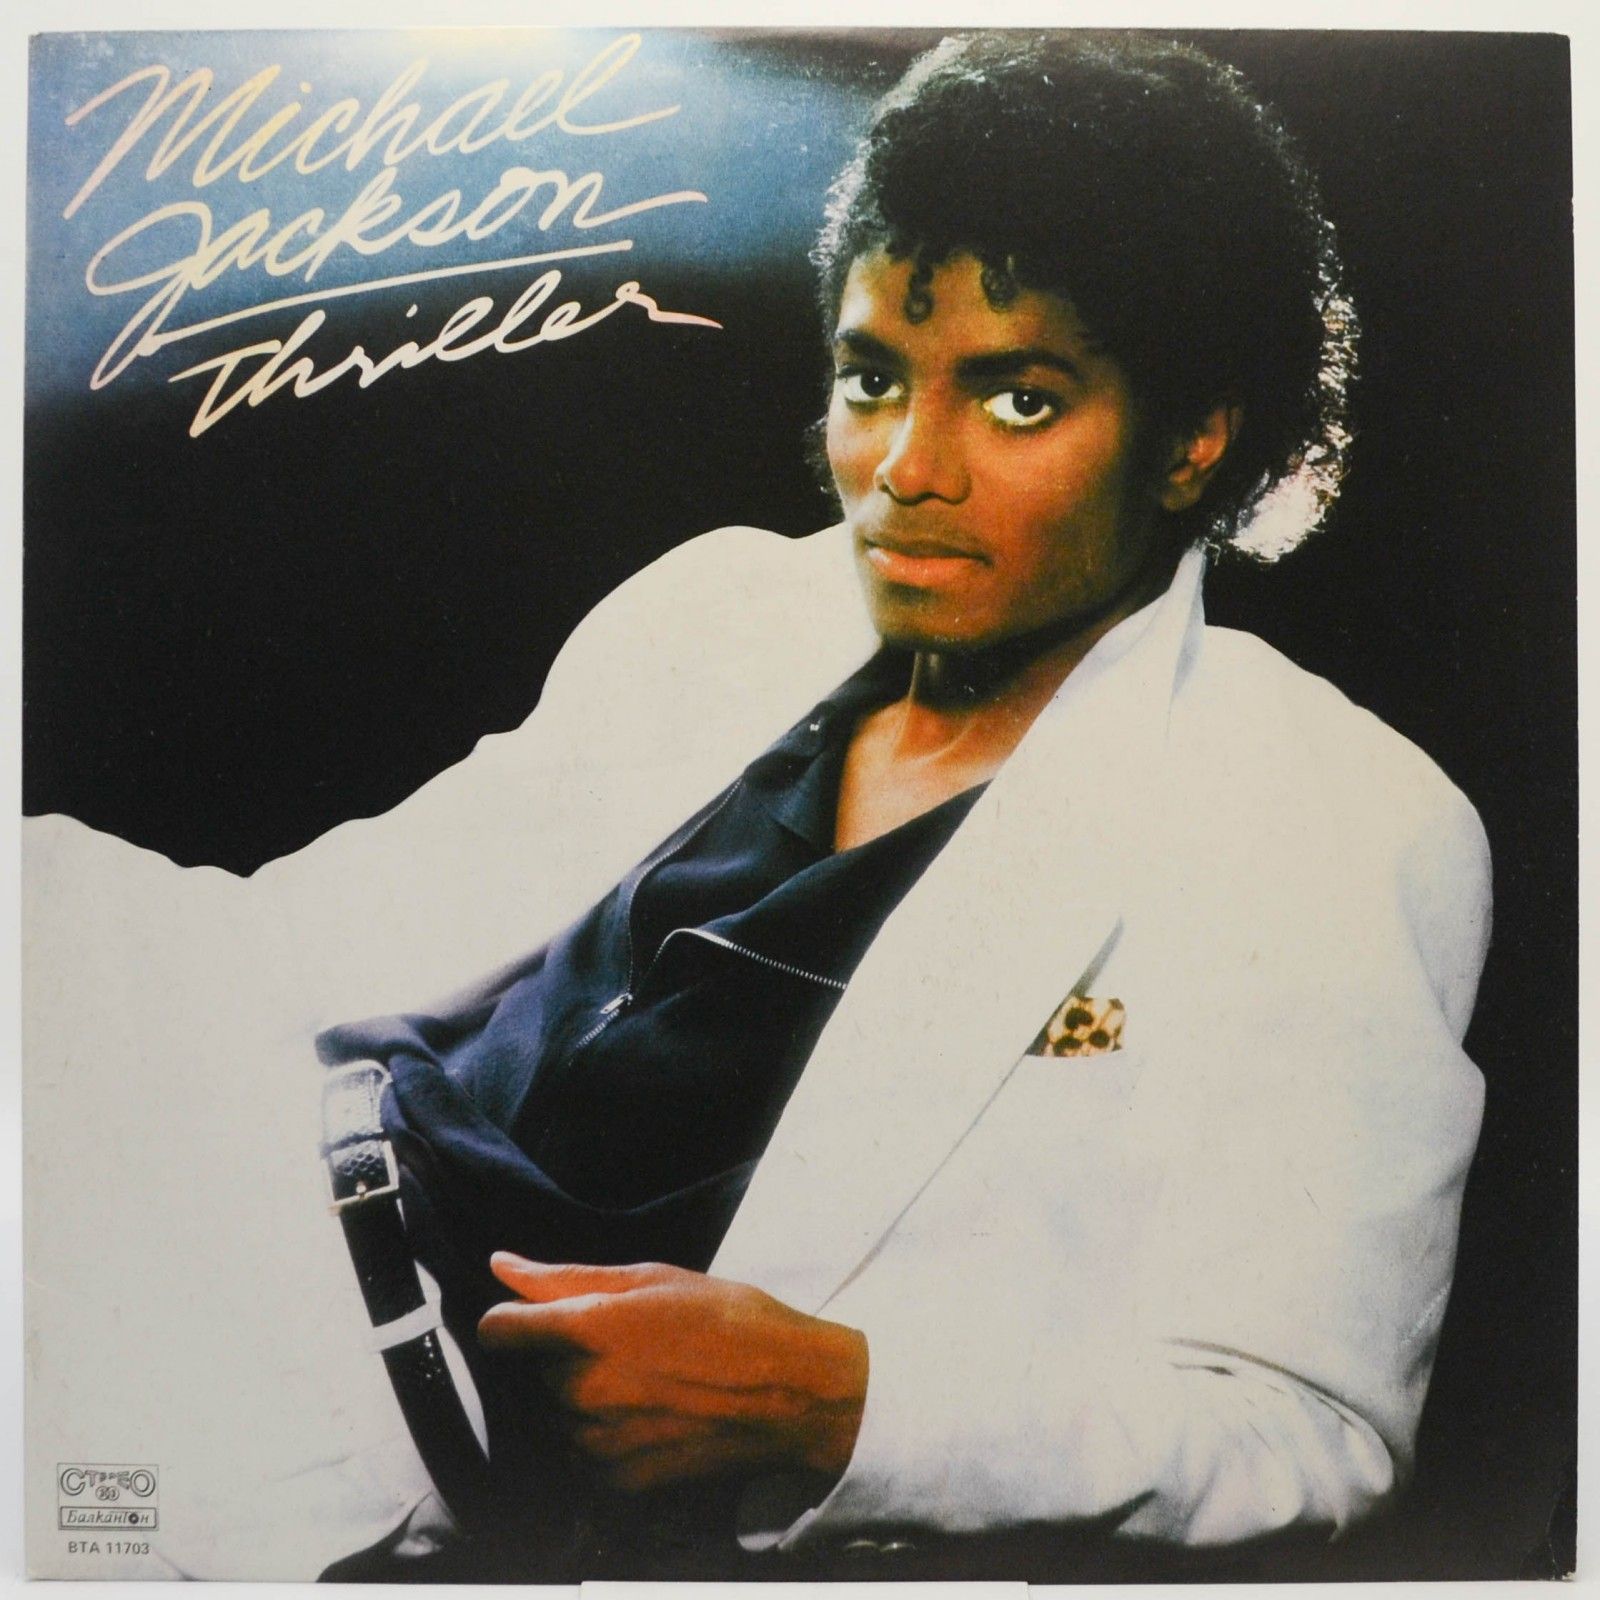 Michael Jackson — Thriller, 1988